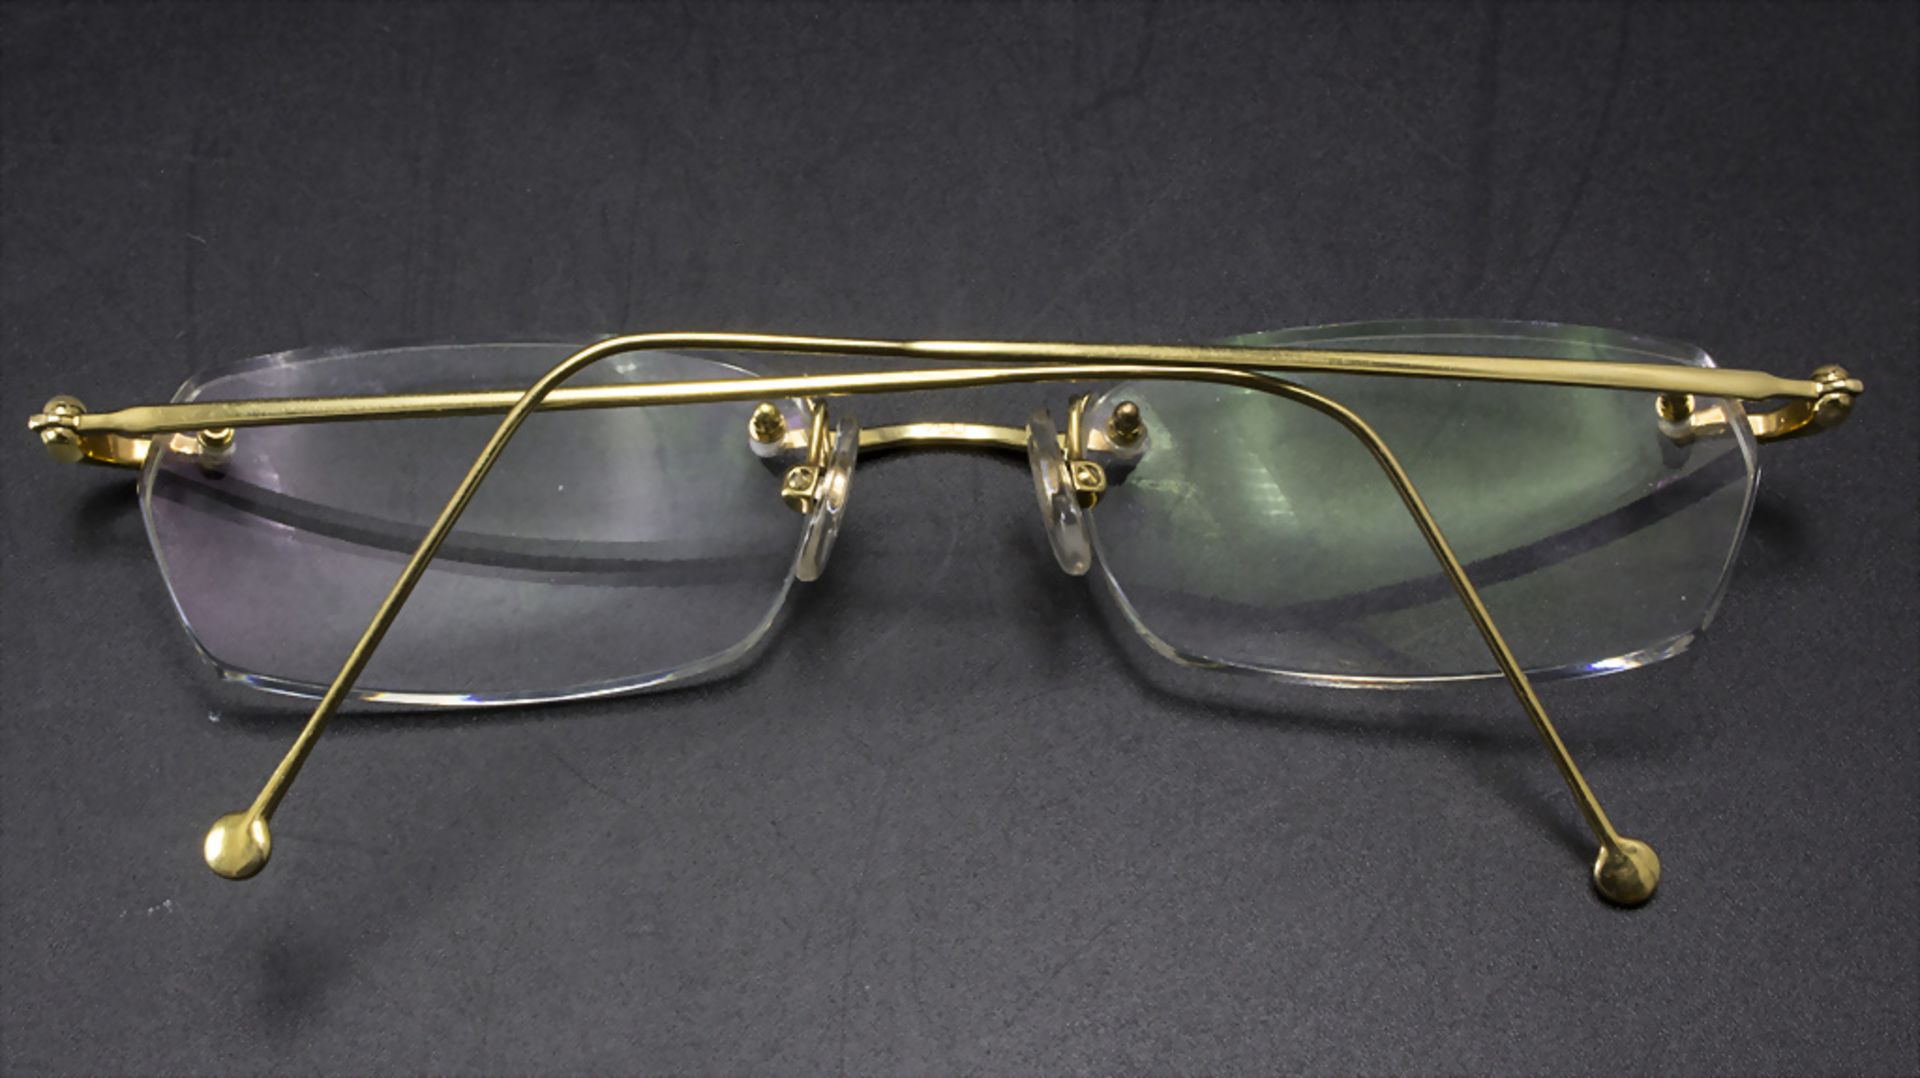 Brille 'Lotos' / Glasses 'Lotos' in 18k gold, deutsch, 20. Jh. - Image 2 of 6